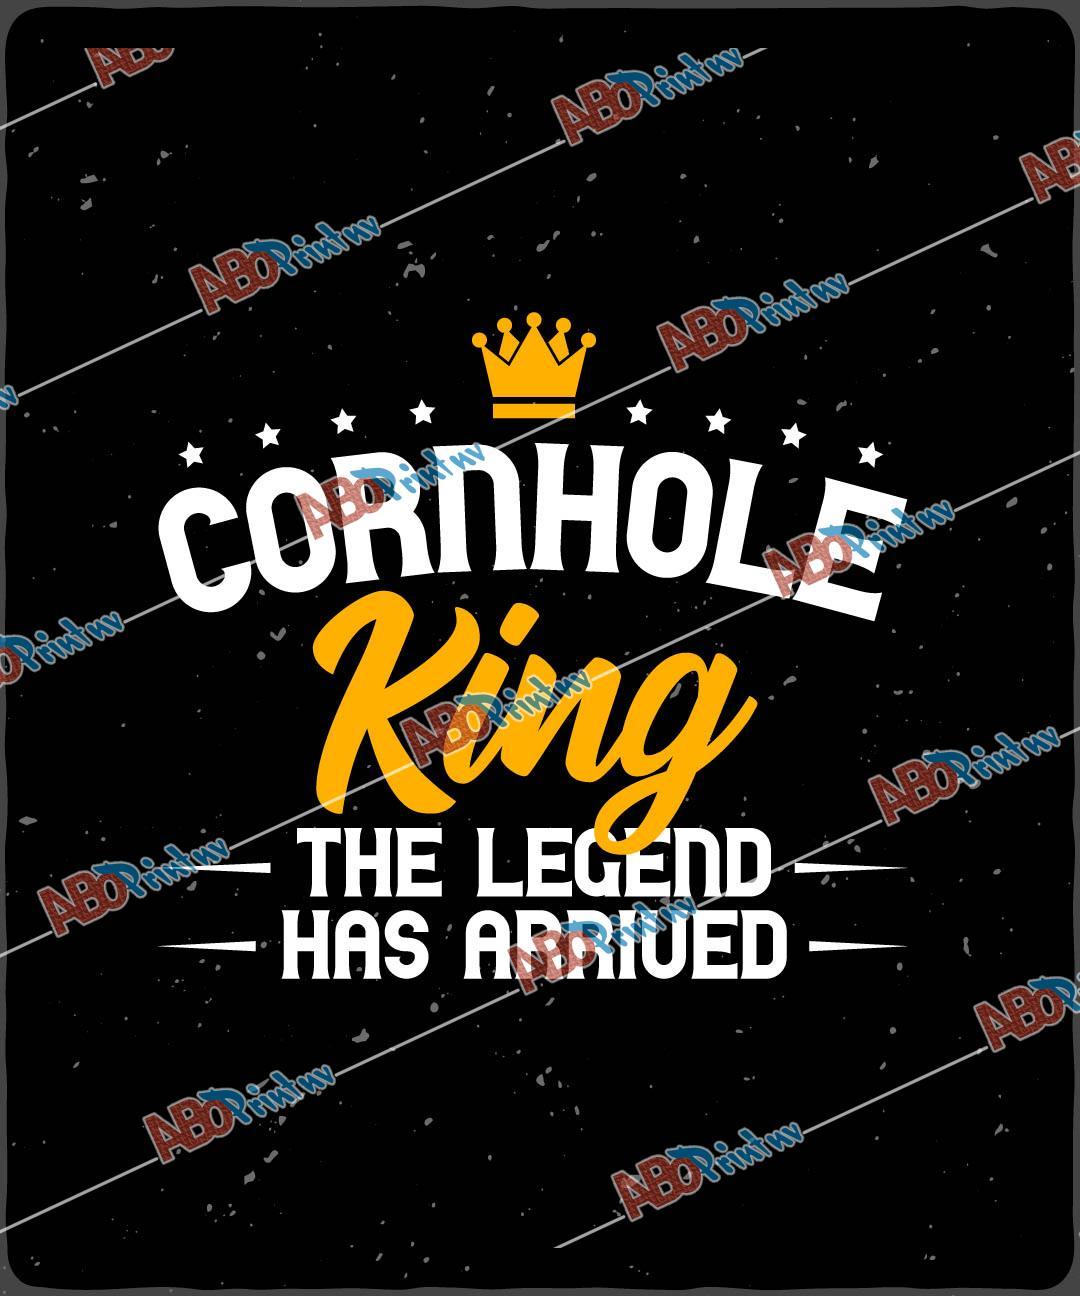 Cornhole King The Legend Has Arrived.jpg